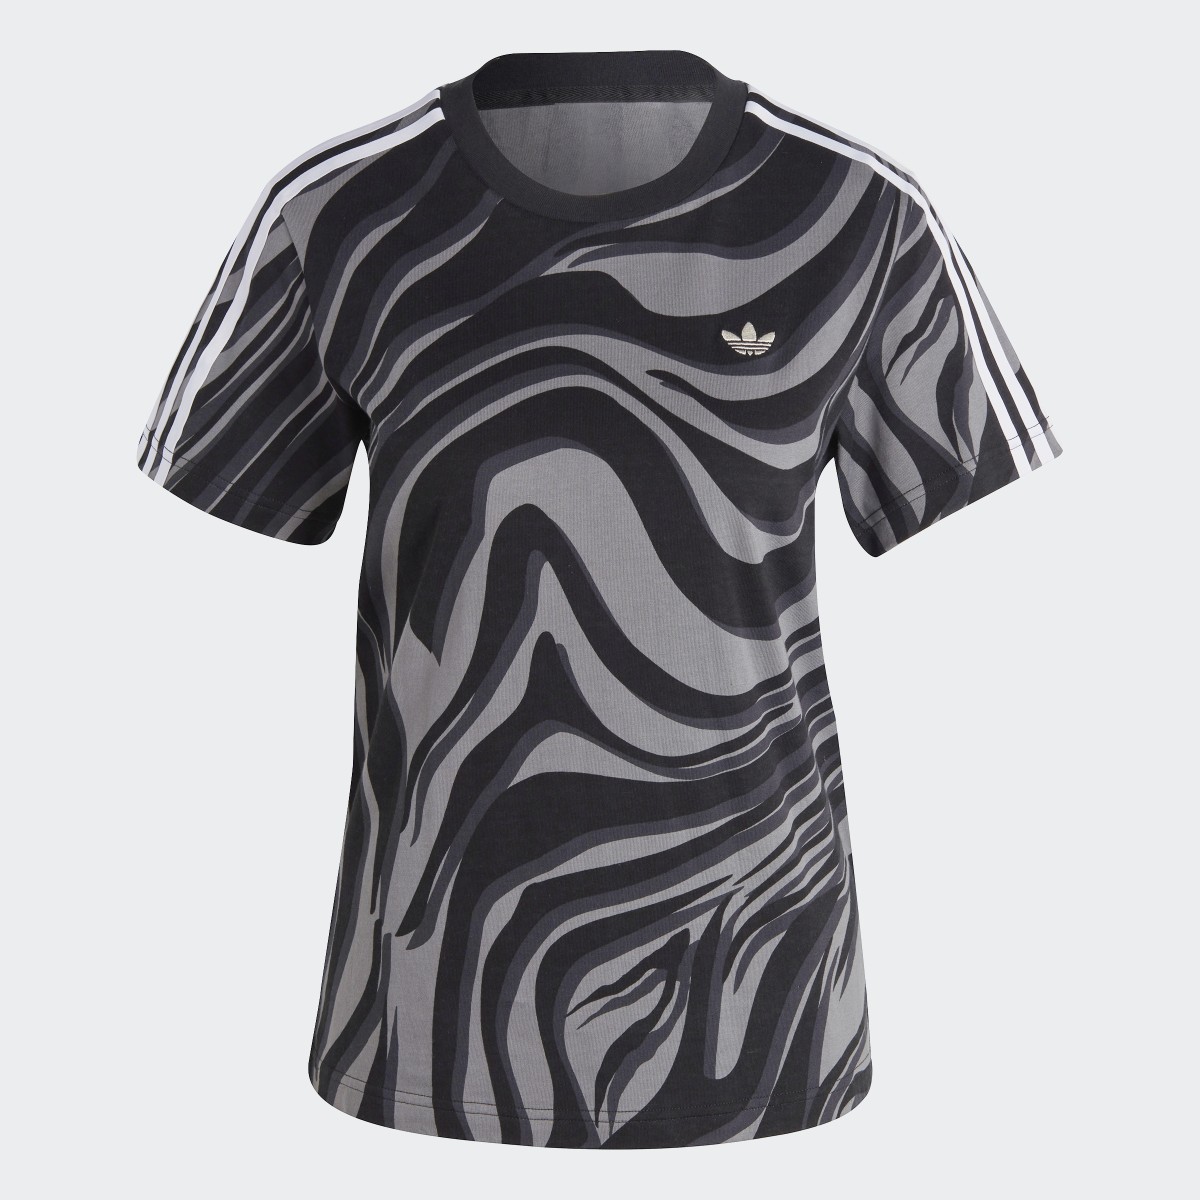 Adidas Abstract Allover Animal Print T-Shirt. 5